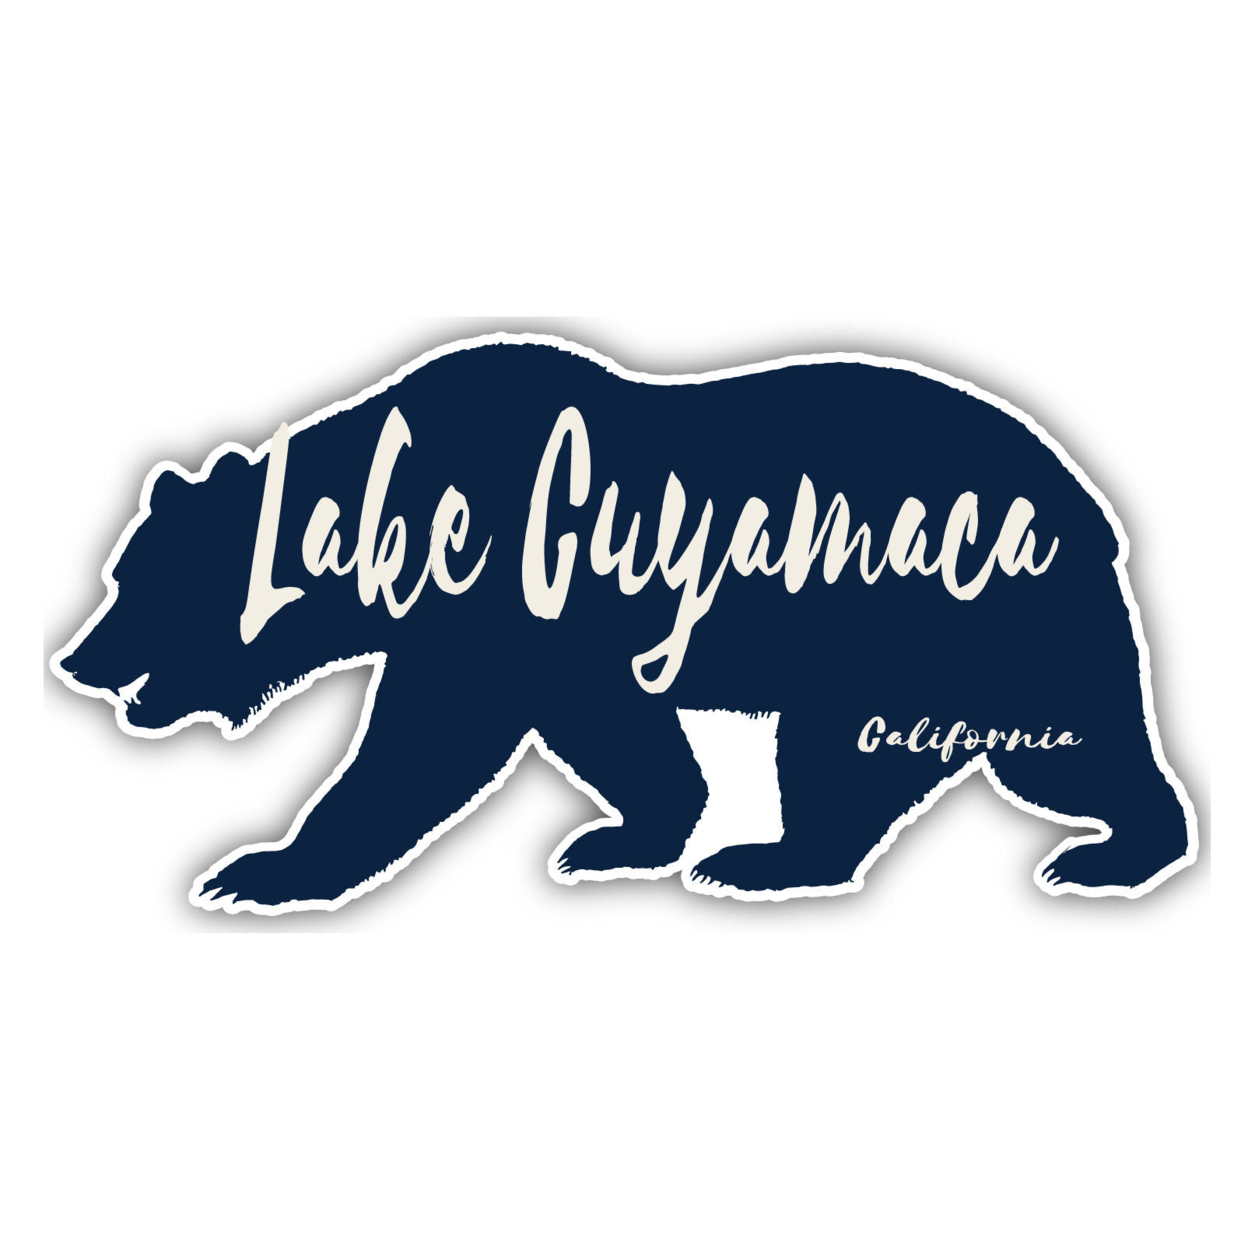 Lake Jennings California Souvenir Decorative Stickers (Choose Theme And Size) - 2-Inch, Bear